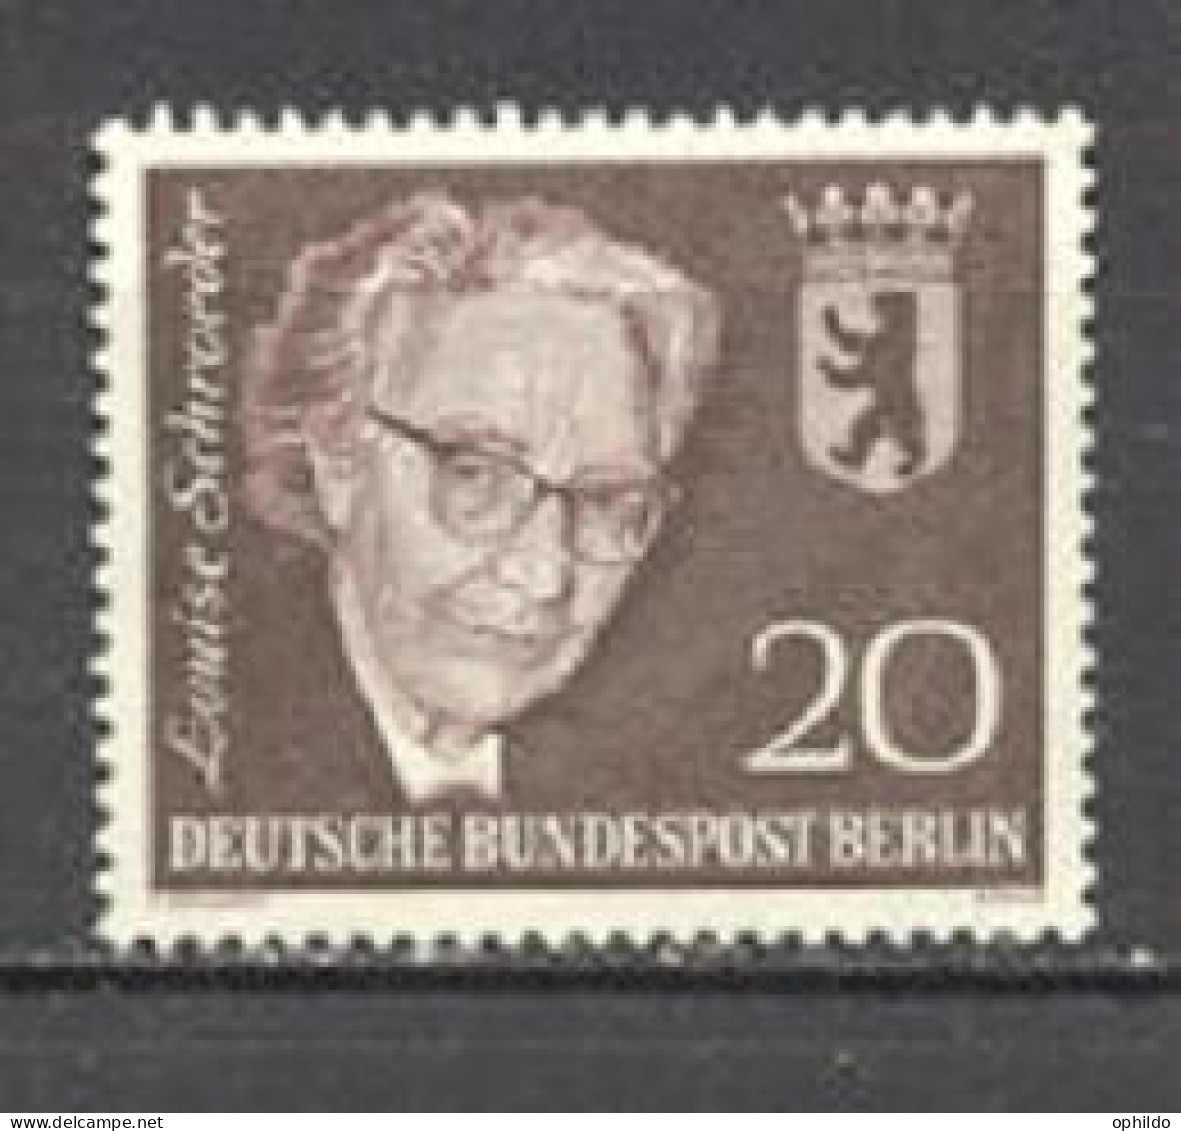 Berlin  177  * *  TB   - Unused Stamps